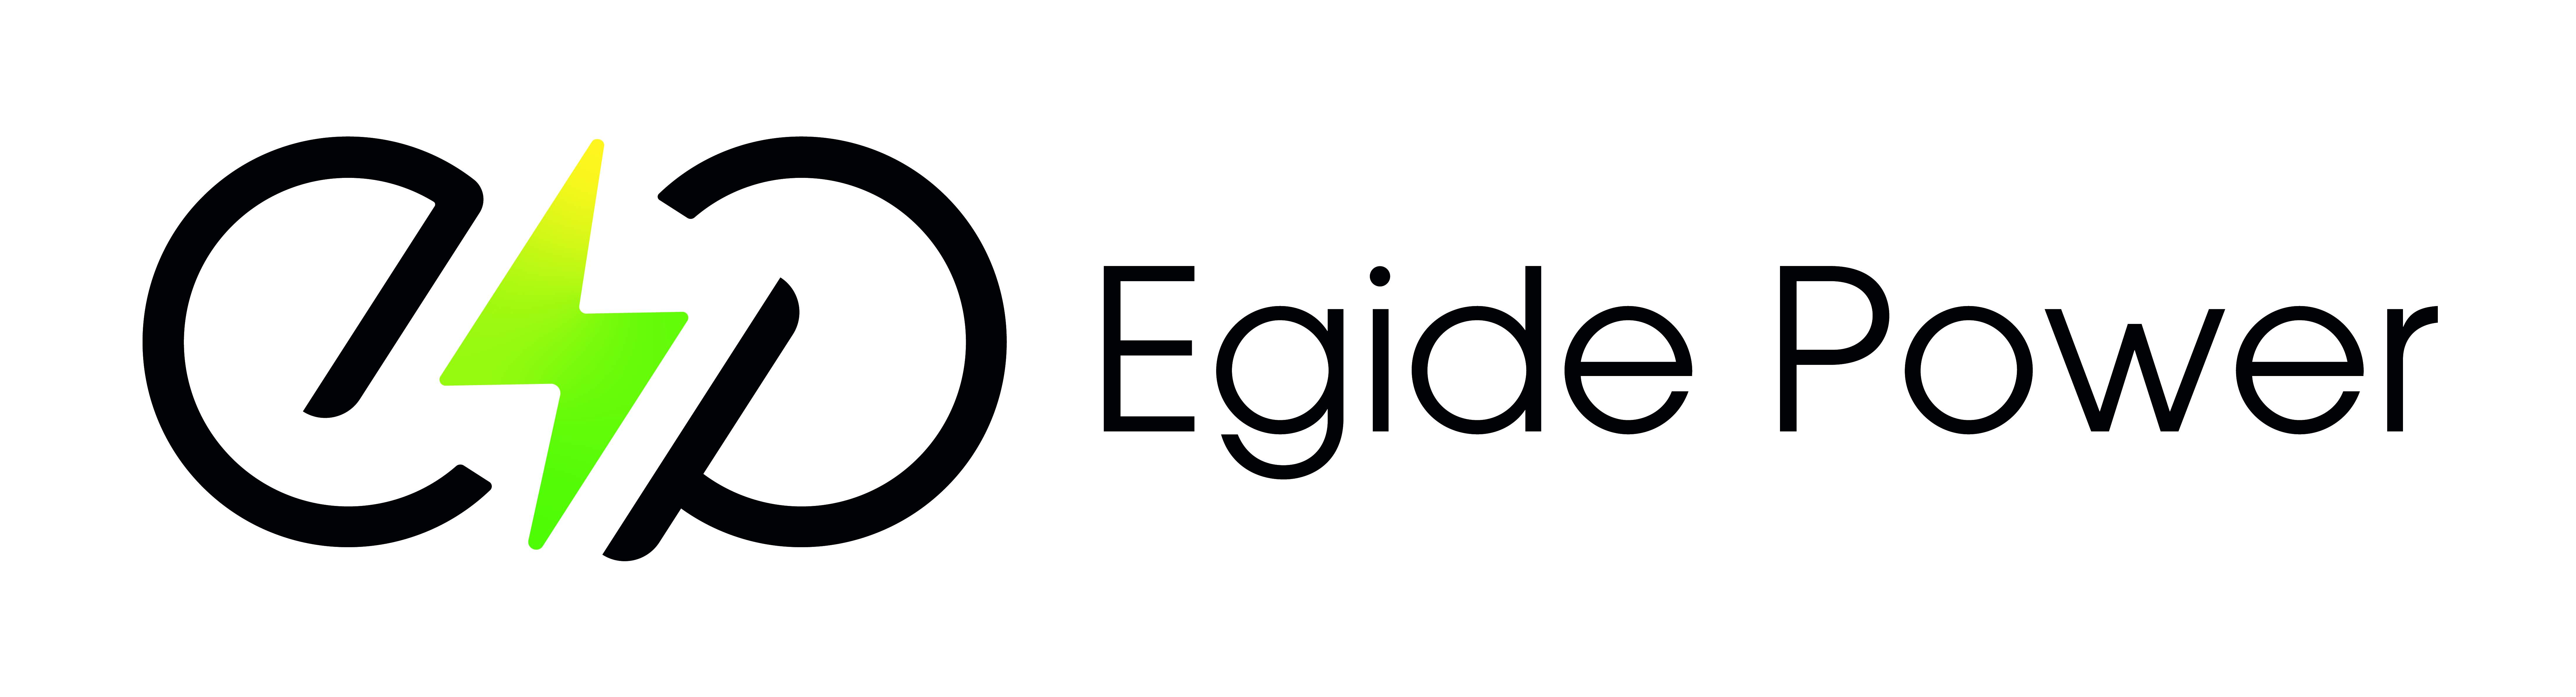 Logo EGIDE POWER installation de panneaux photovoltaïques Gard 30